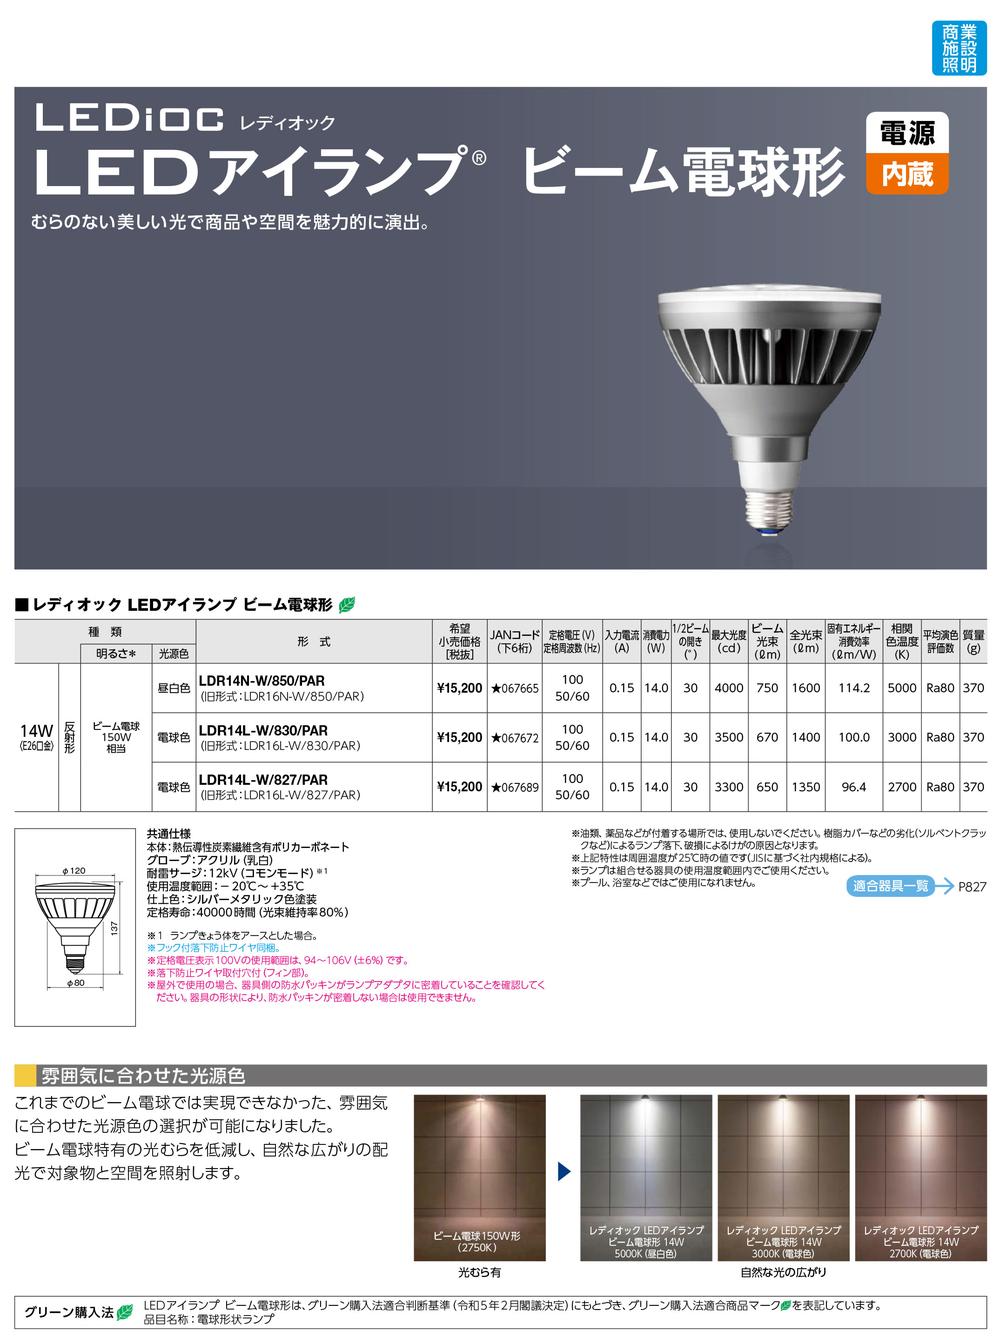 LEDランプ